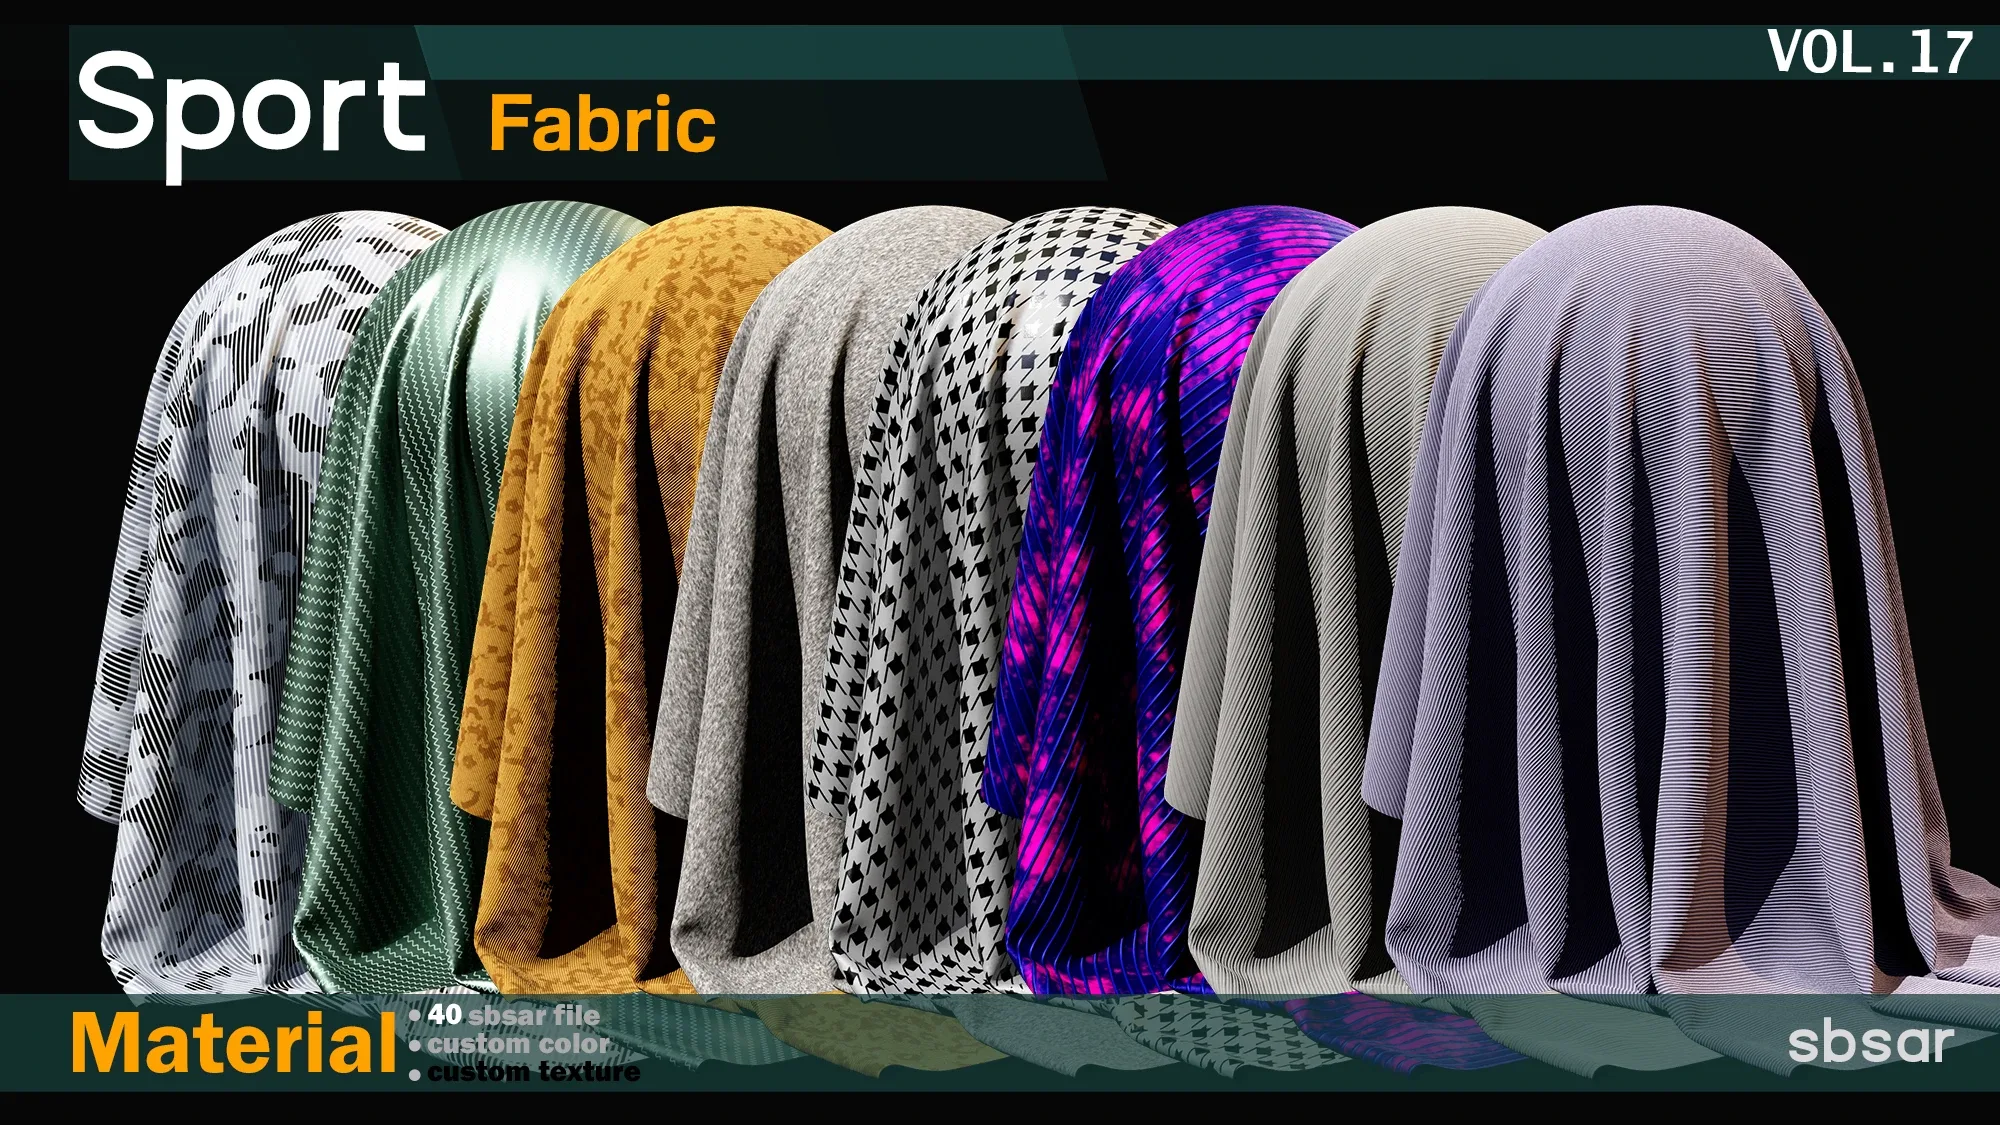 40 Sport fabric Material -SBSAR -custom color -custom fabric -VOL 17